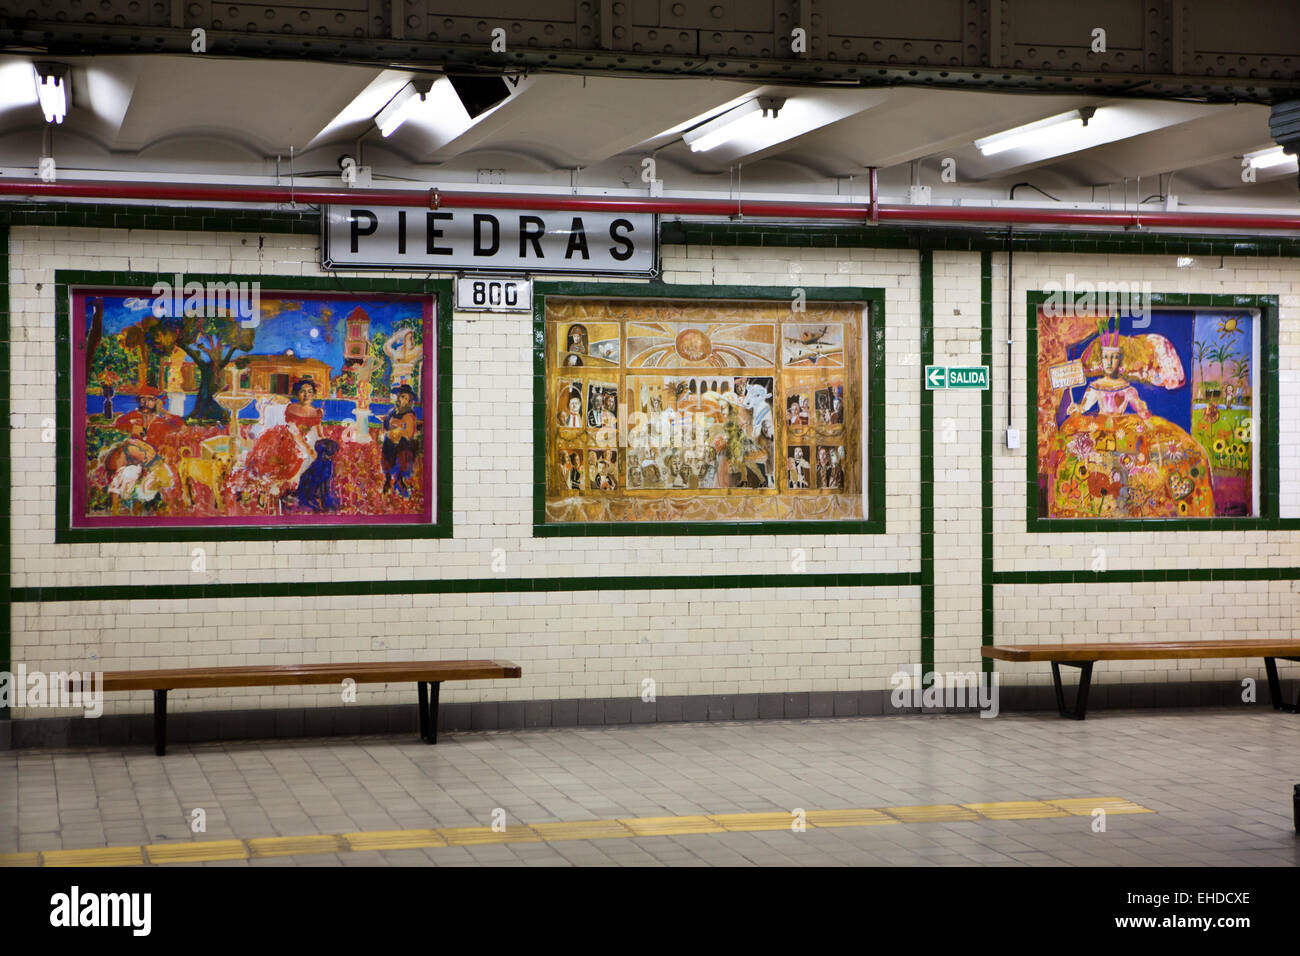 Argentina, Buenos Aires, Subte, underground metro railway system, Piedras station artwork on walls Stock Photo